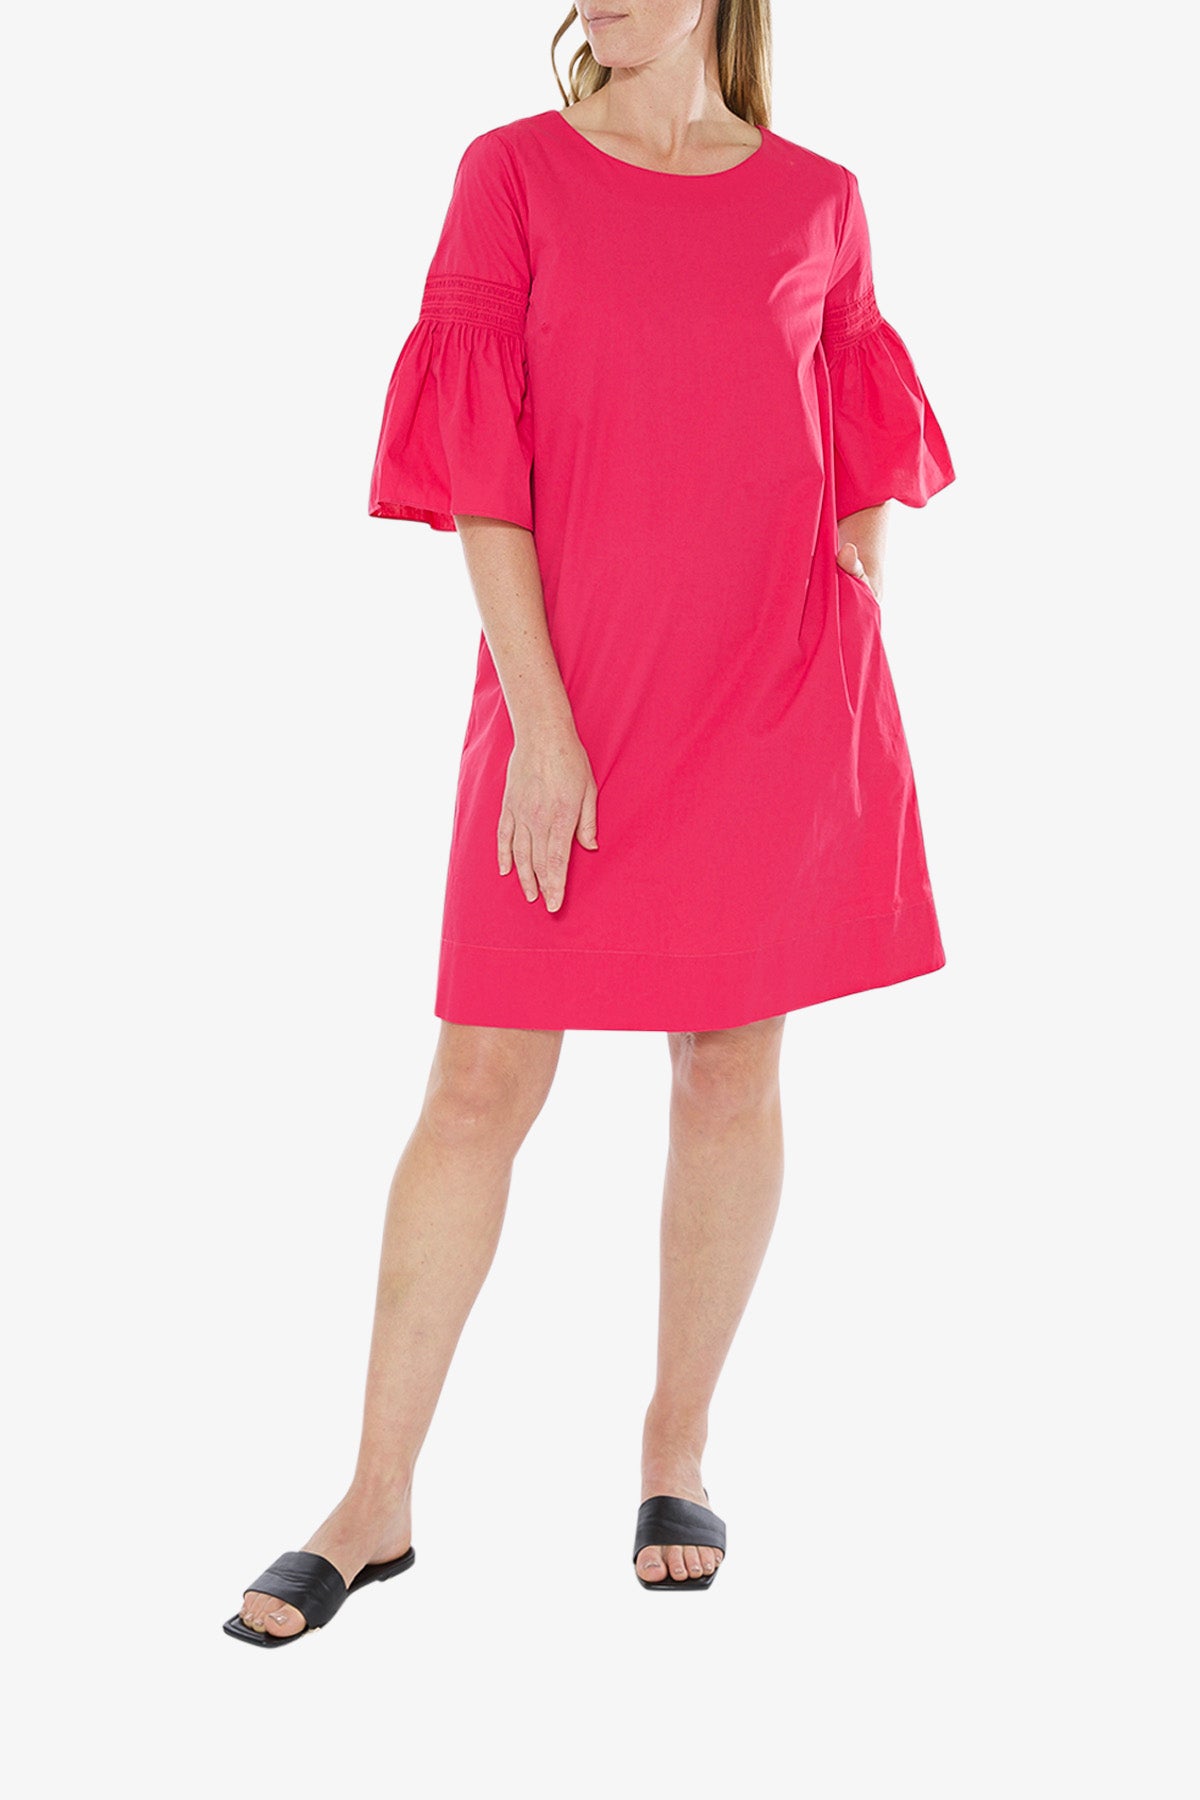 Shirred Sleeve Dress PinkGin